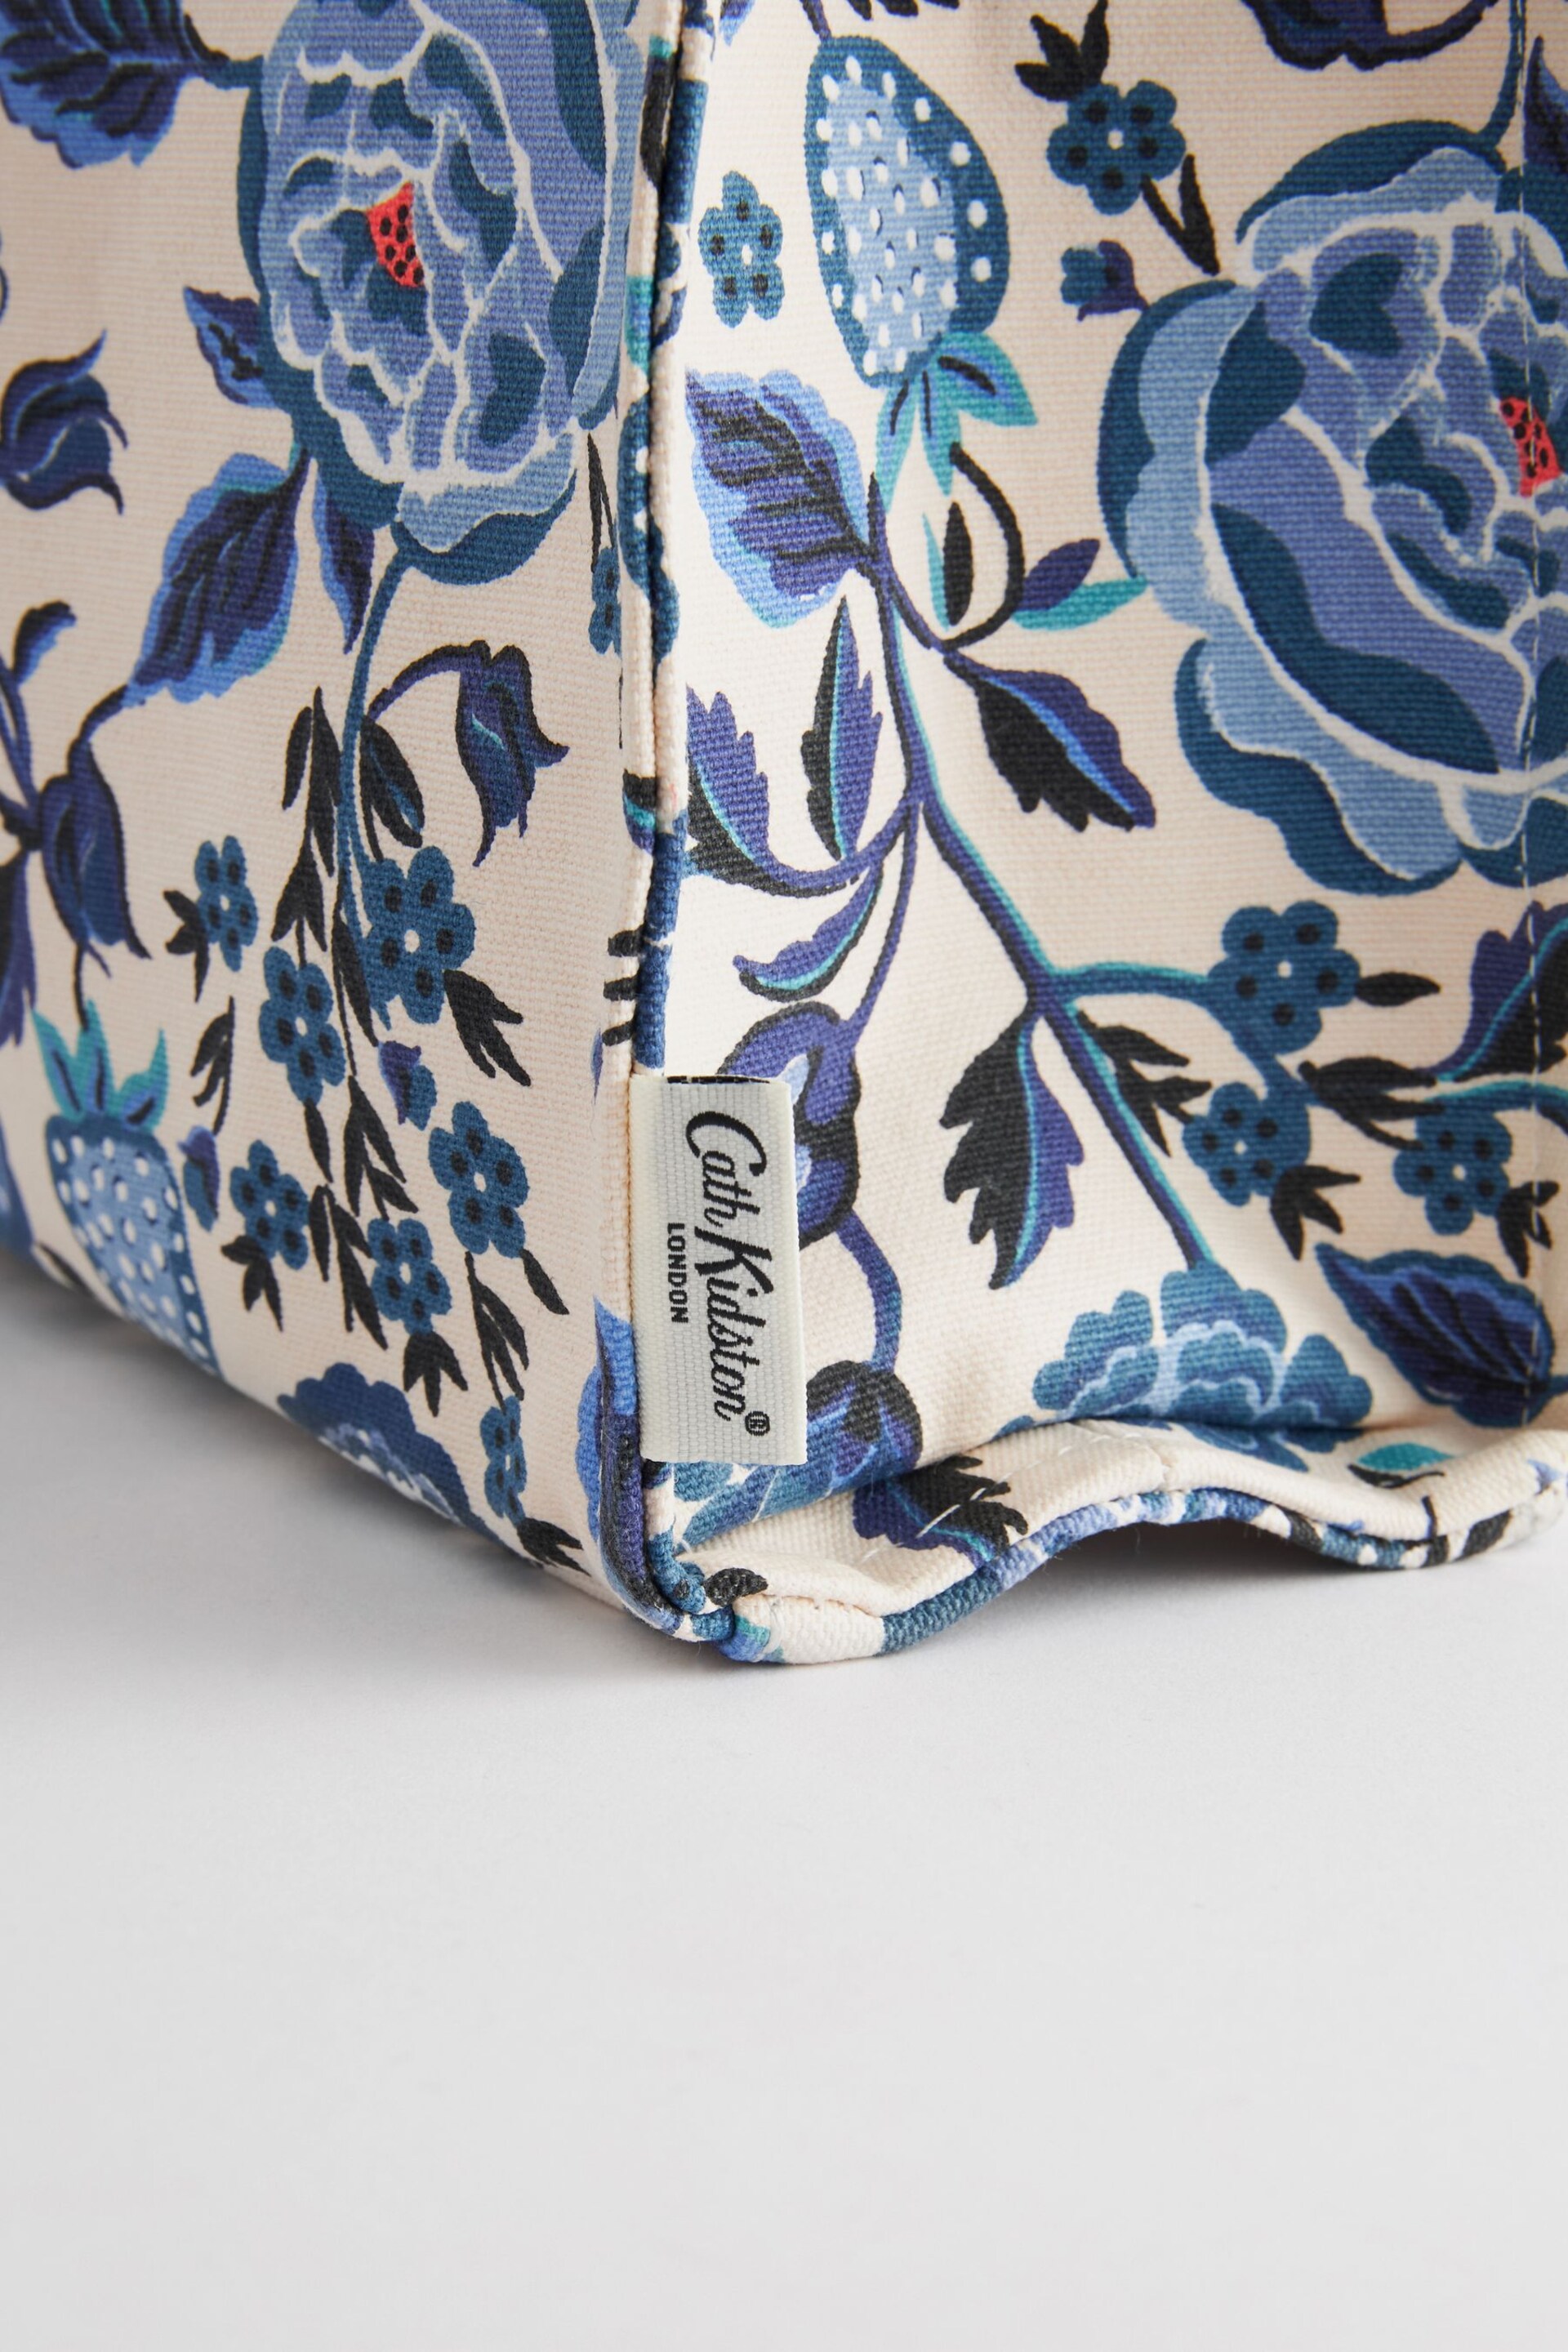 Cath Kidston Blue Floral Large Coated Bookbag - Image 4 of 6